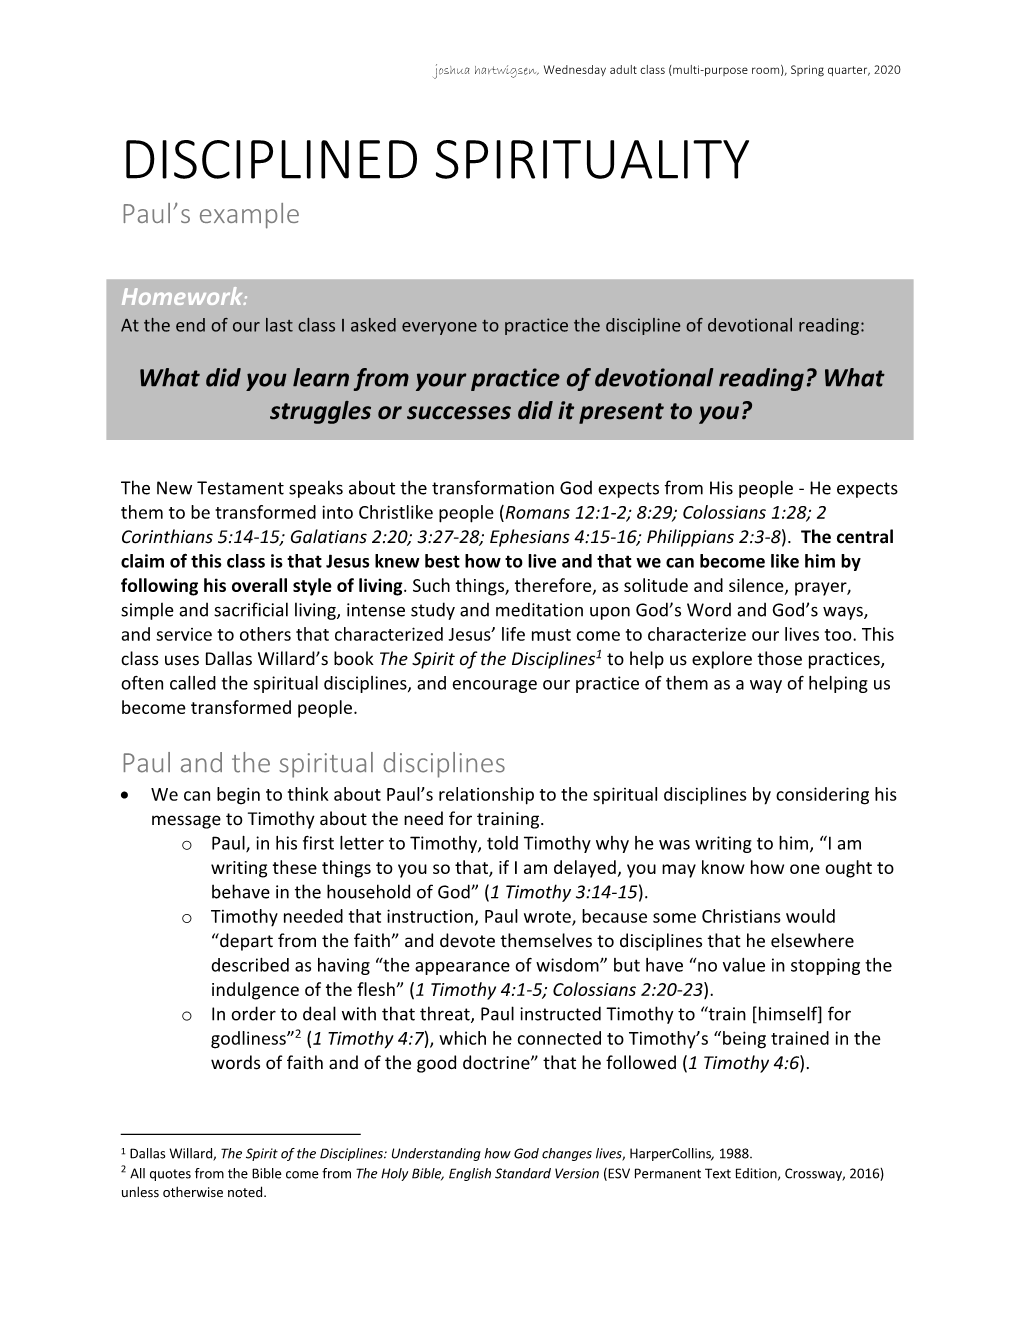 DISCIPLINED SPIRITUALITY Paul’S Example